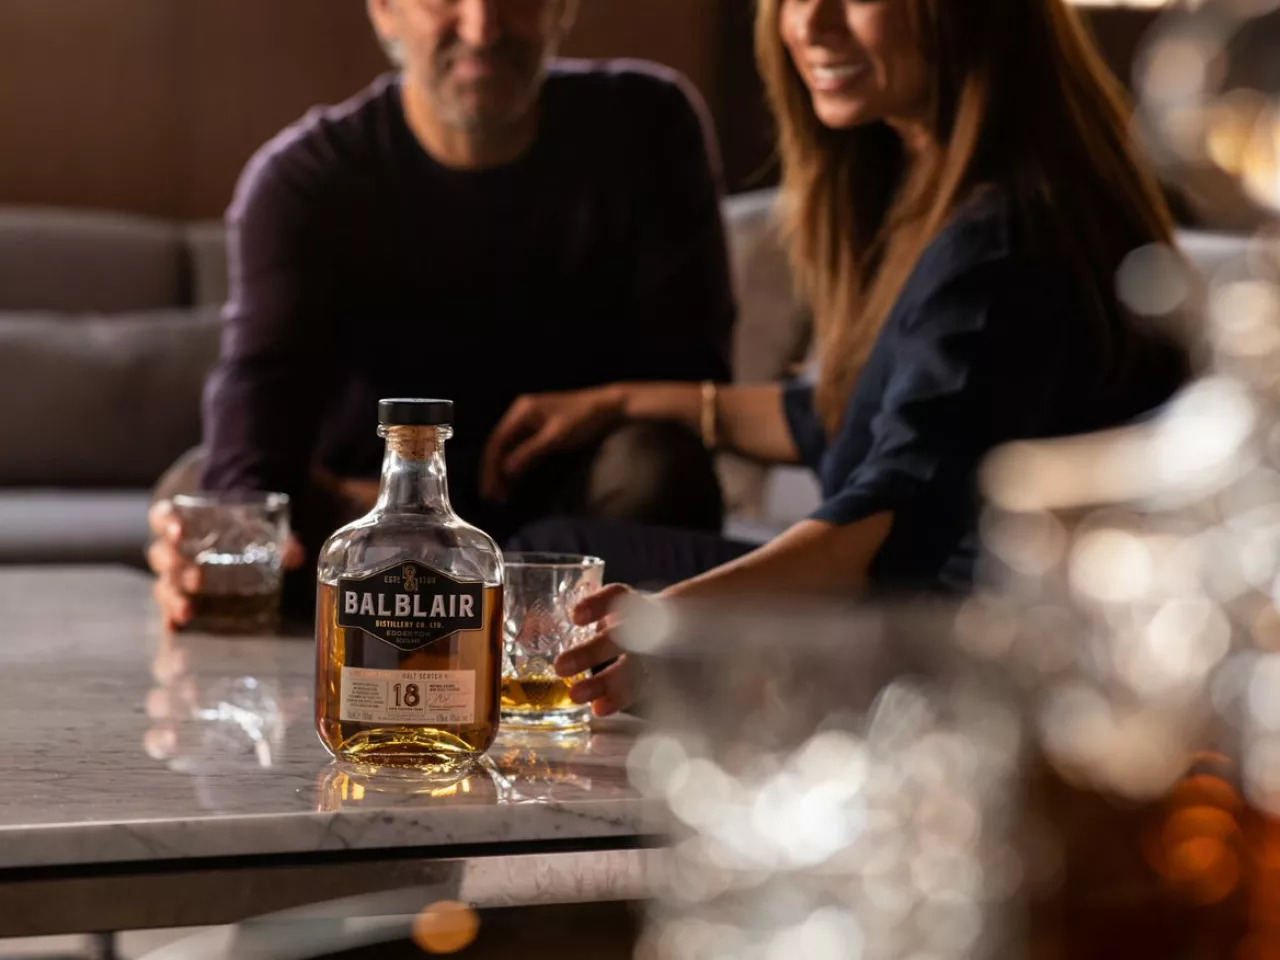 International Beverage Balblair Single Malt Scotch Whisky